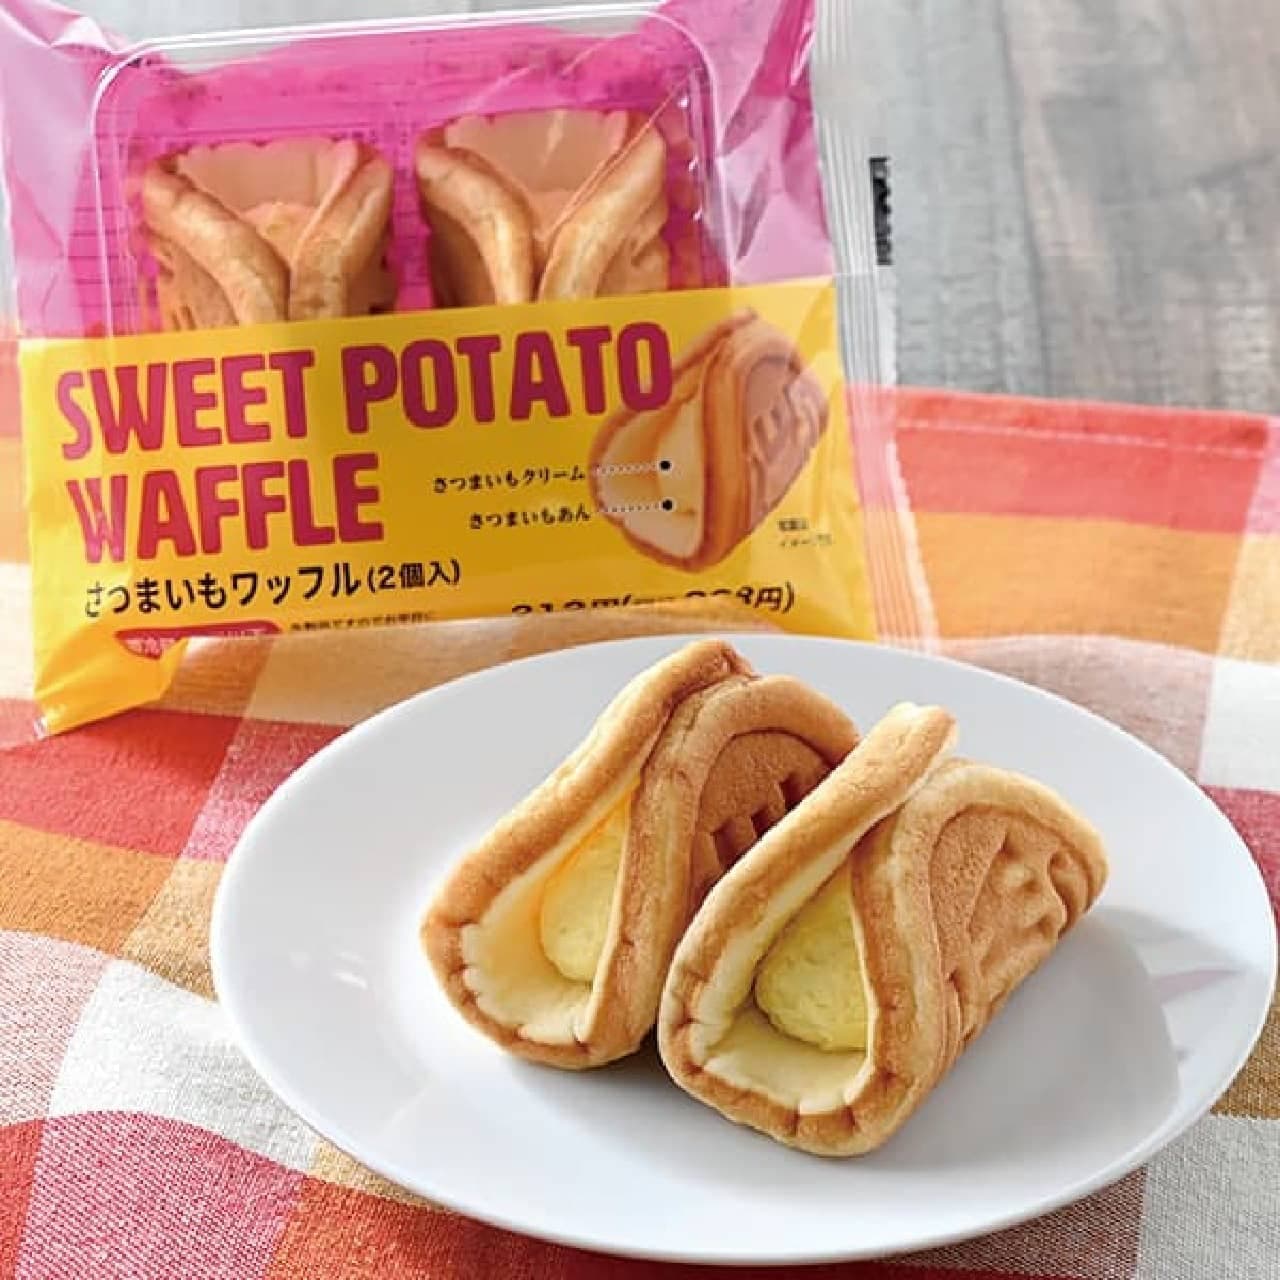 FamilyMart "Sweet Potato Waffle (2 pieces)